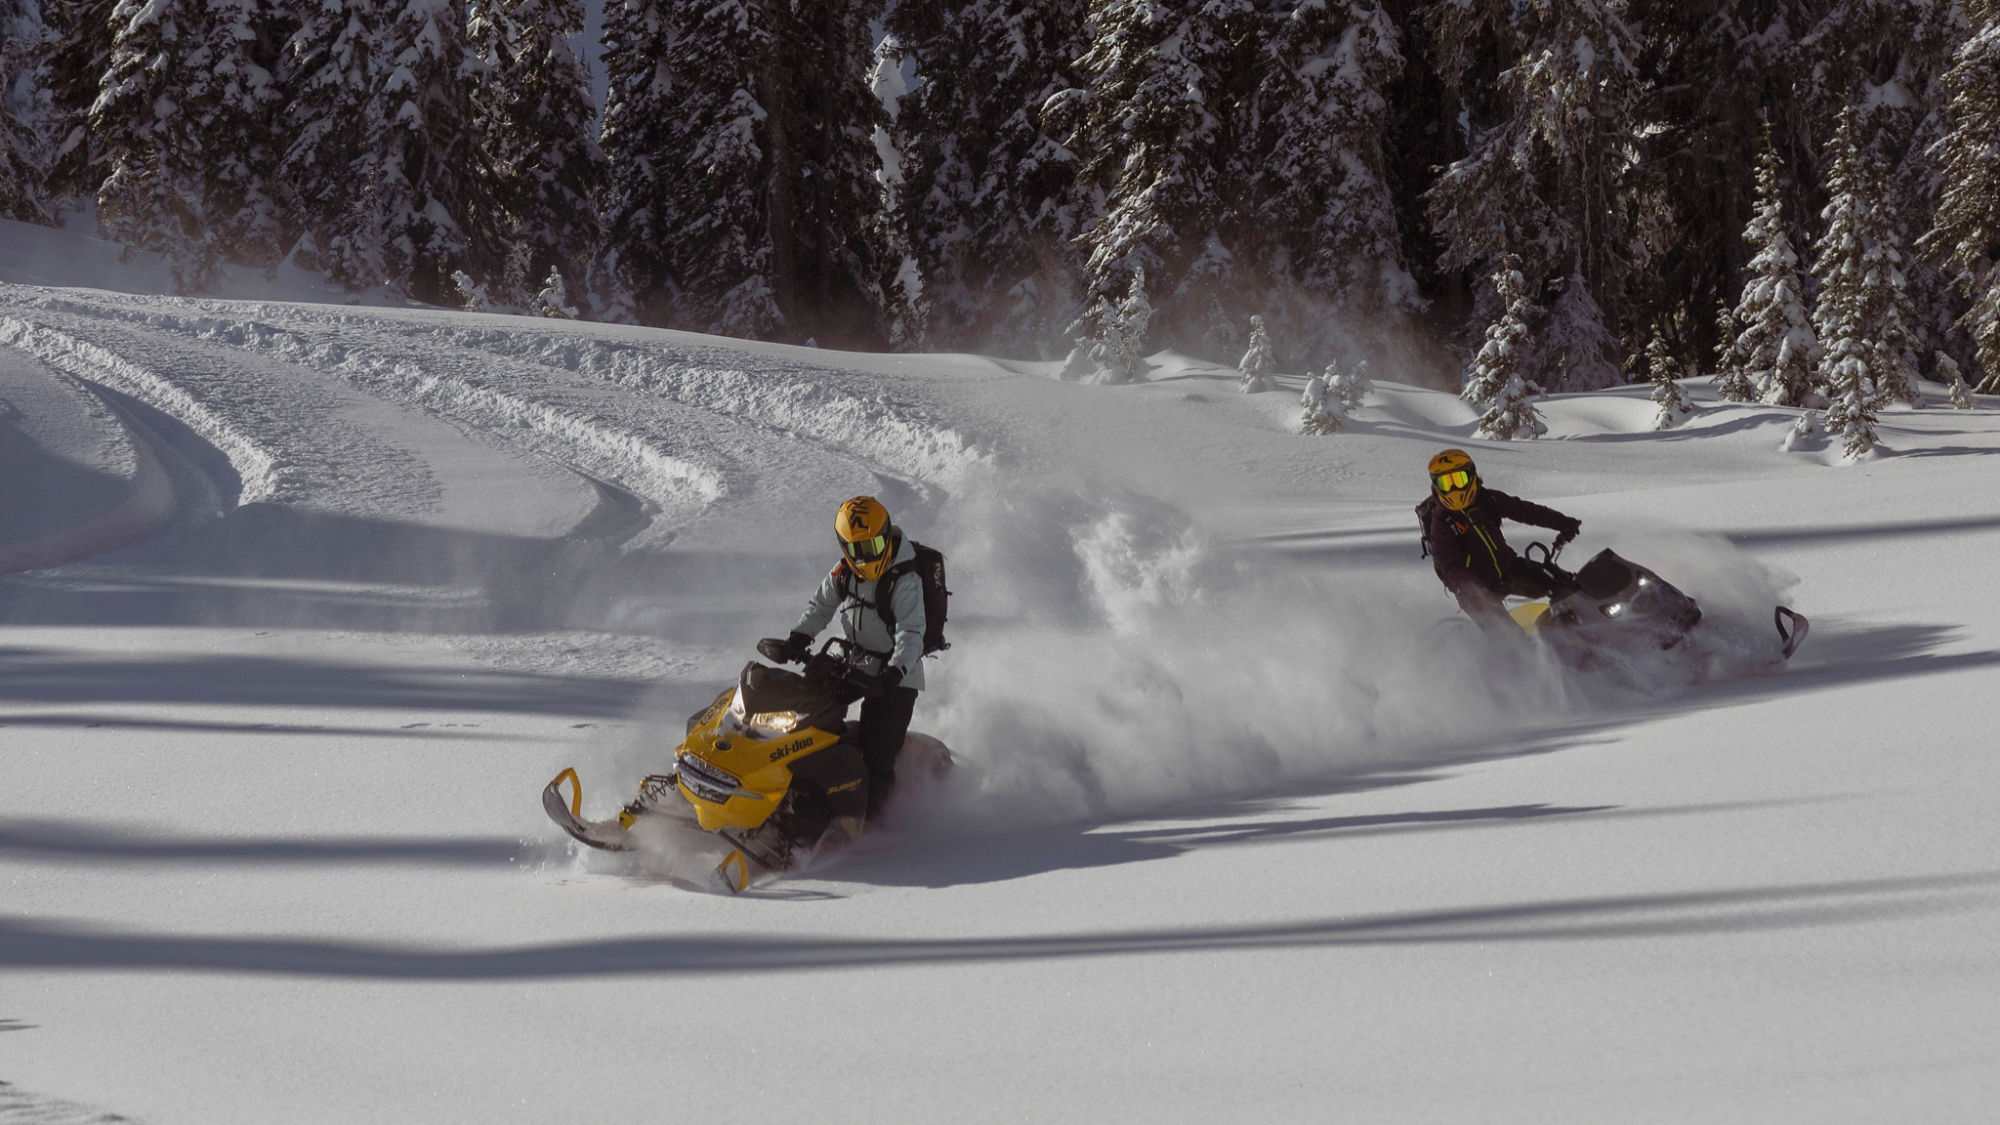 Two Ski-Doo deep snow snowmobile zig-zagging in snow